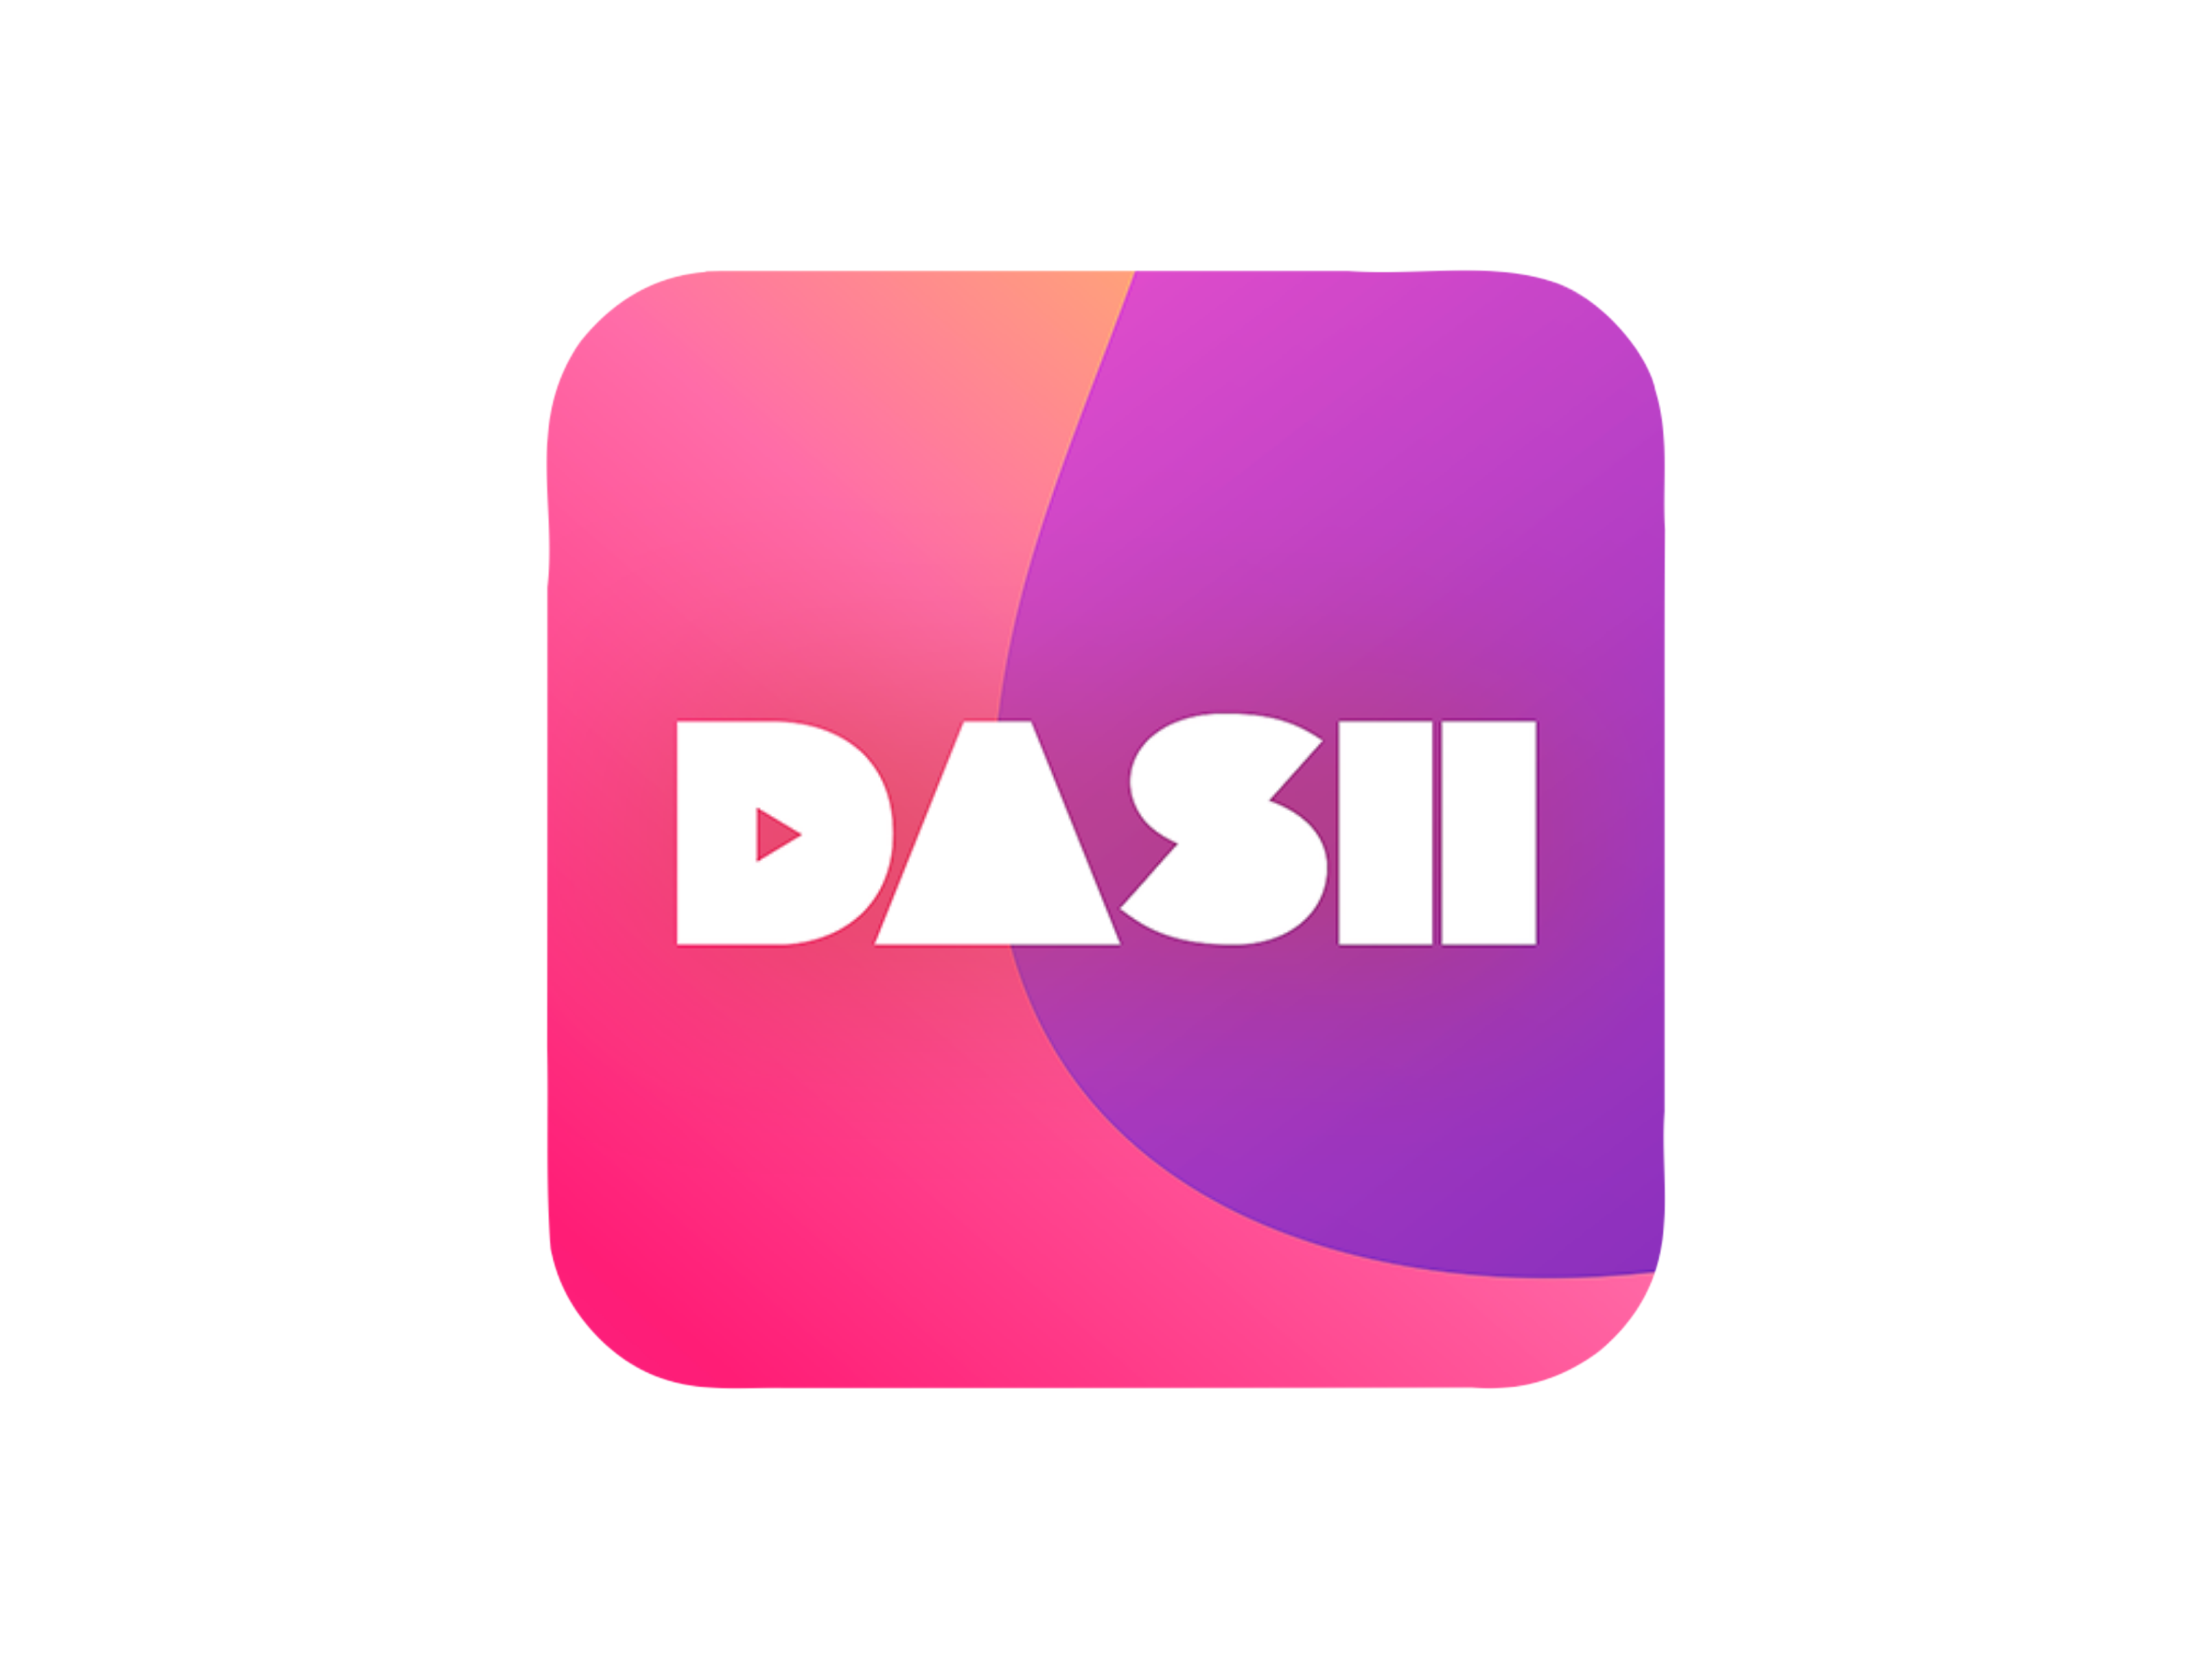 Dash Radio